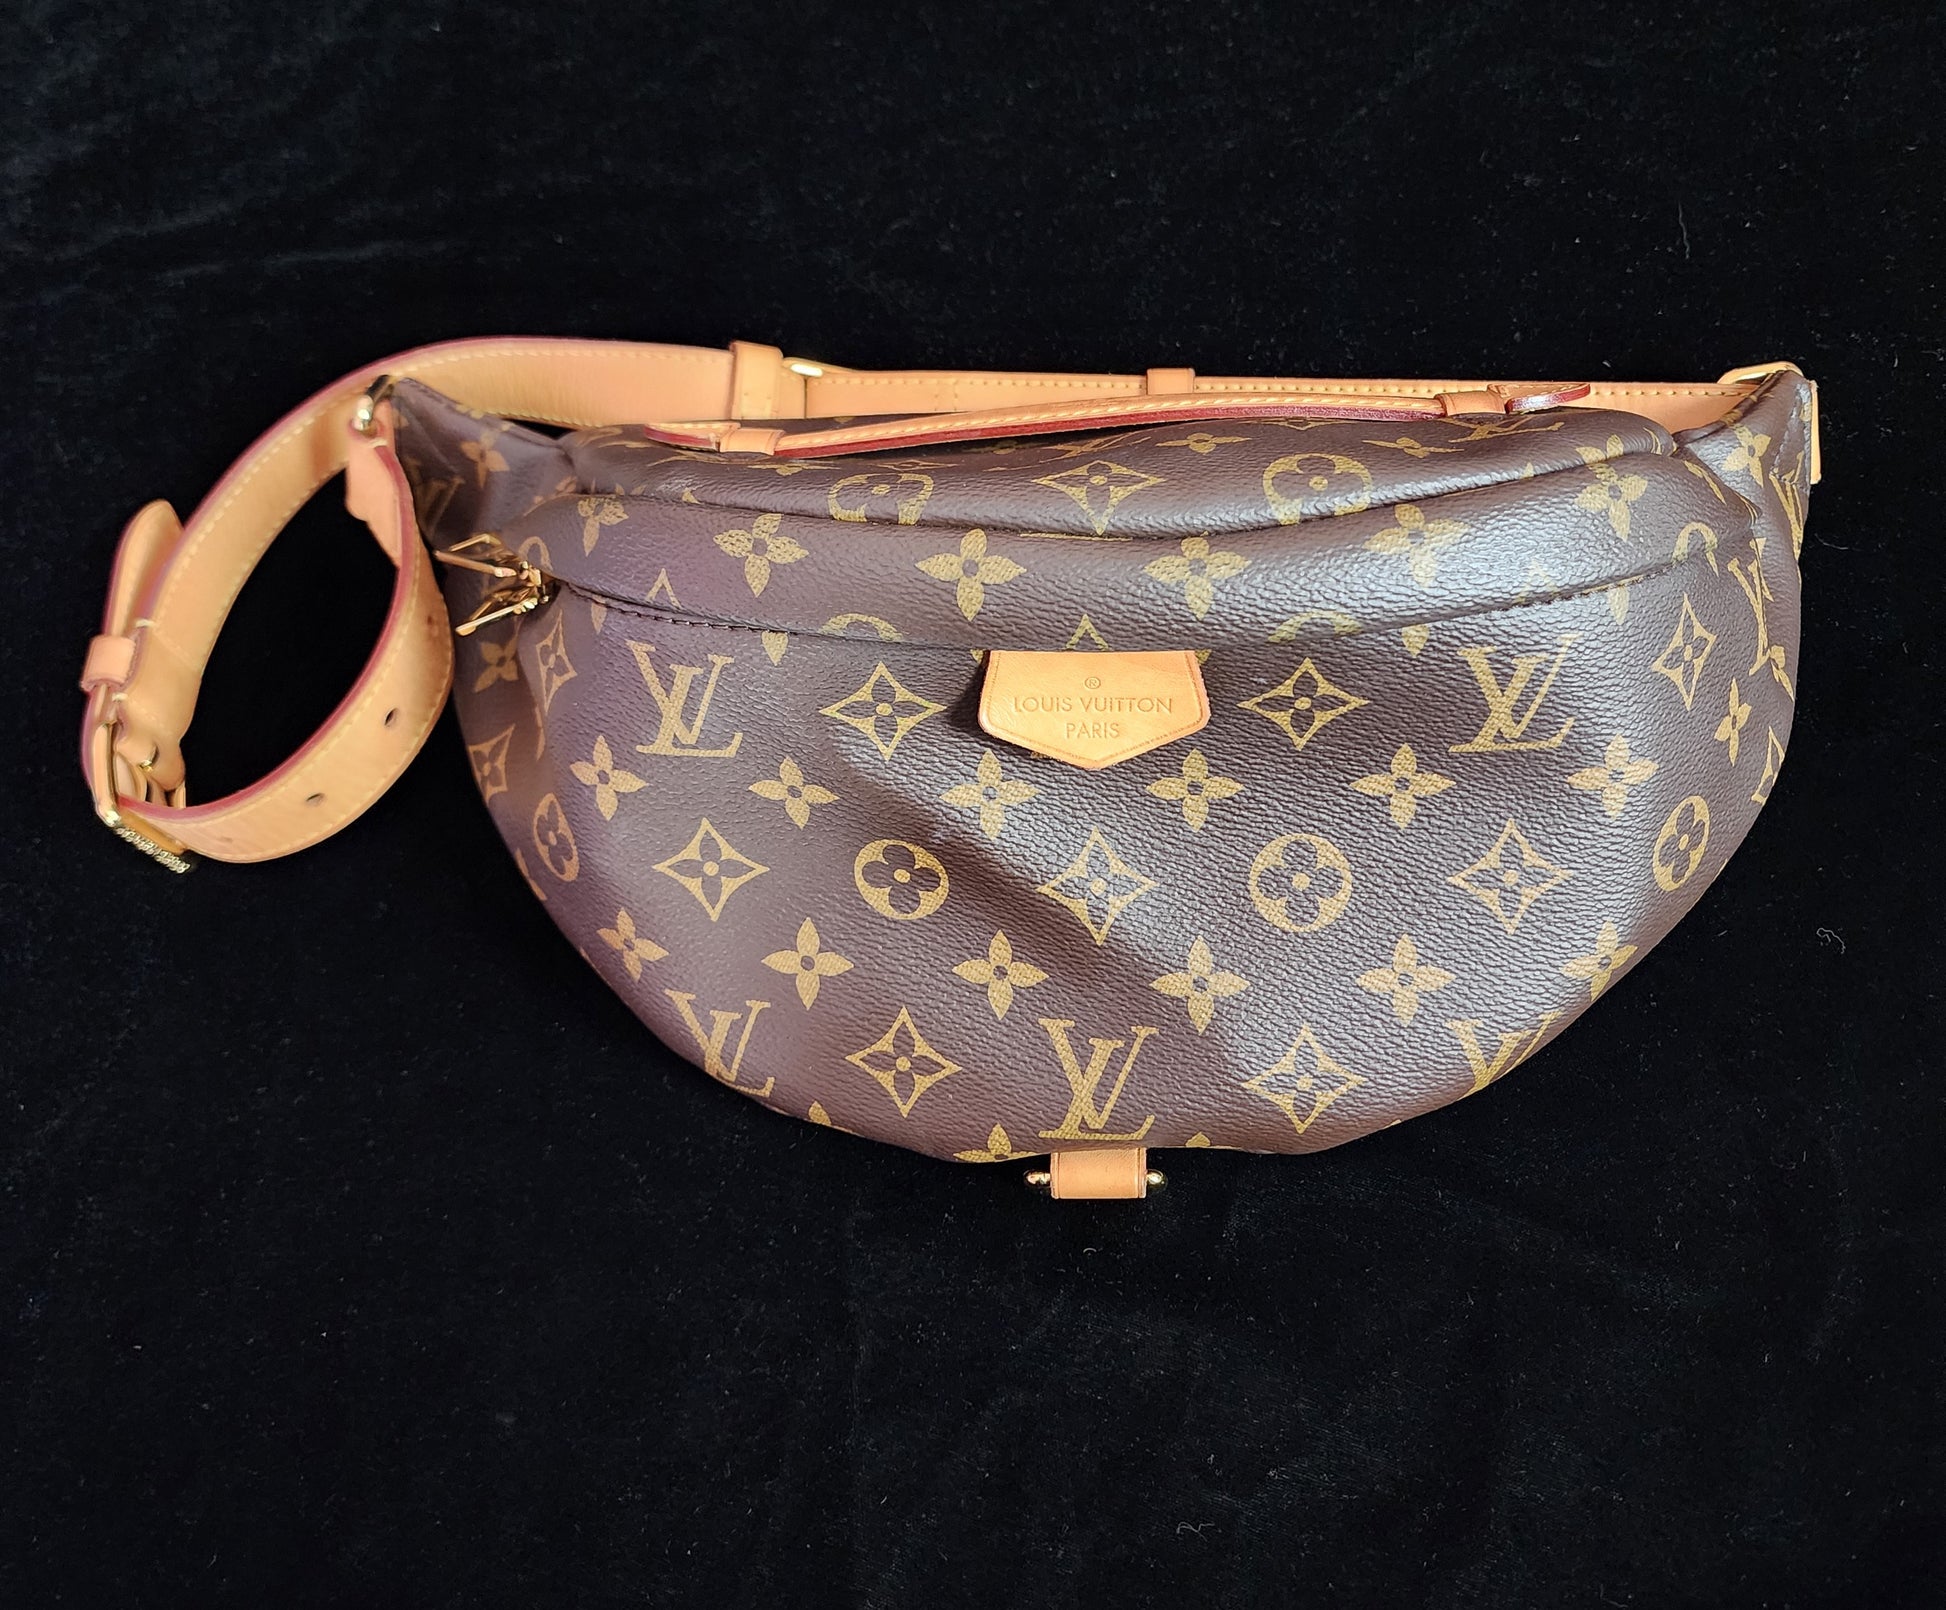 Replica Handbags Louis Vuitton LV Iconic 30 MM Reversible Belt